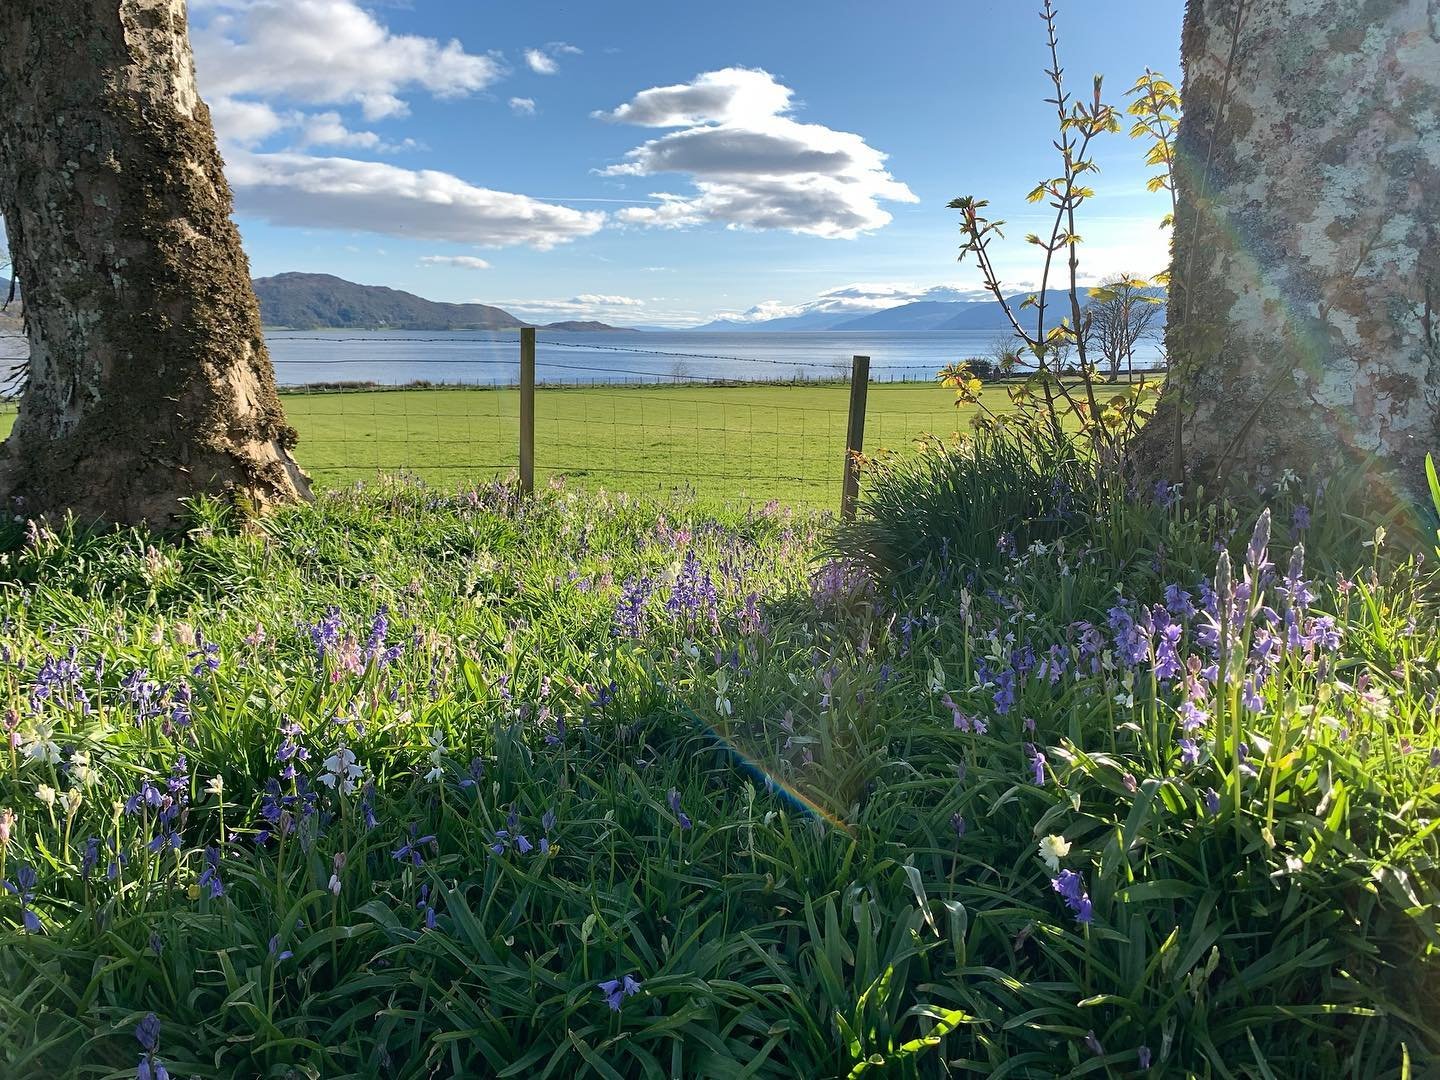 Spring.. beautiful bluebells 

#scottishhighlands #onich #besidetheloch #fortwilliam #fortwilliamscotland #springbreaks #familyholidays #scottishselfcatering #highlandaccommodation #lochside #lochlinnhe #lochlinnheviews #gettingawayfromitall #glencoe